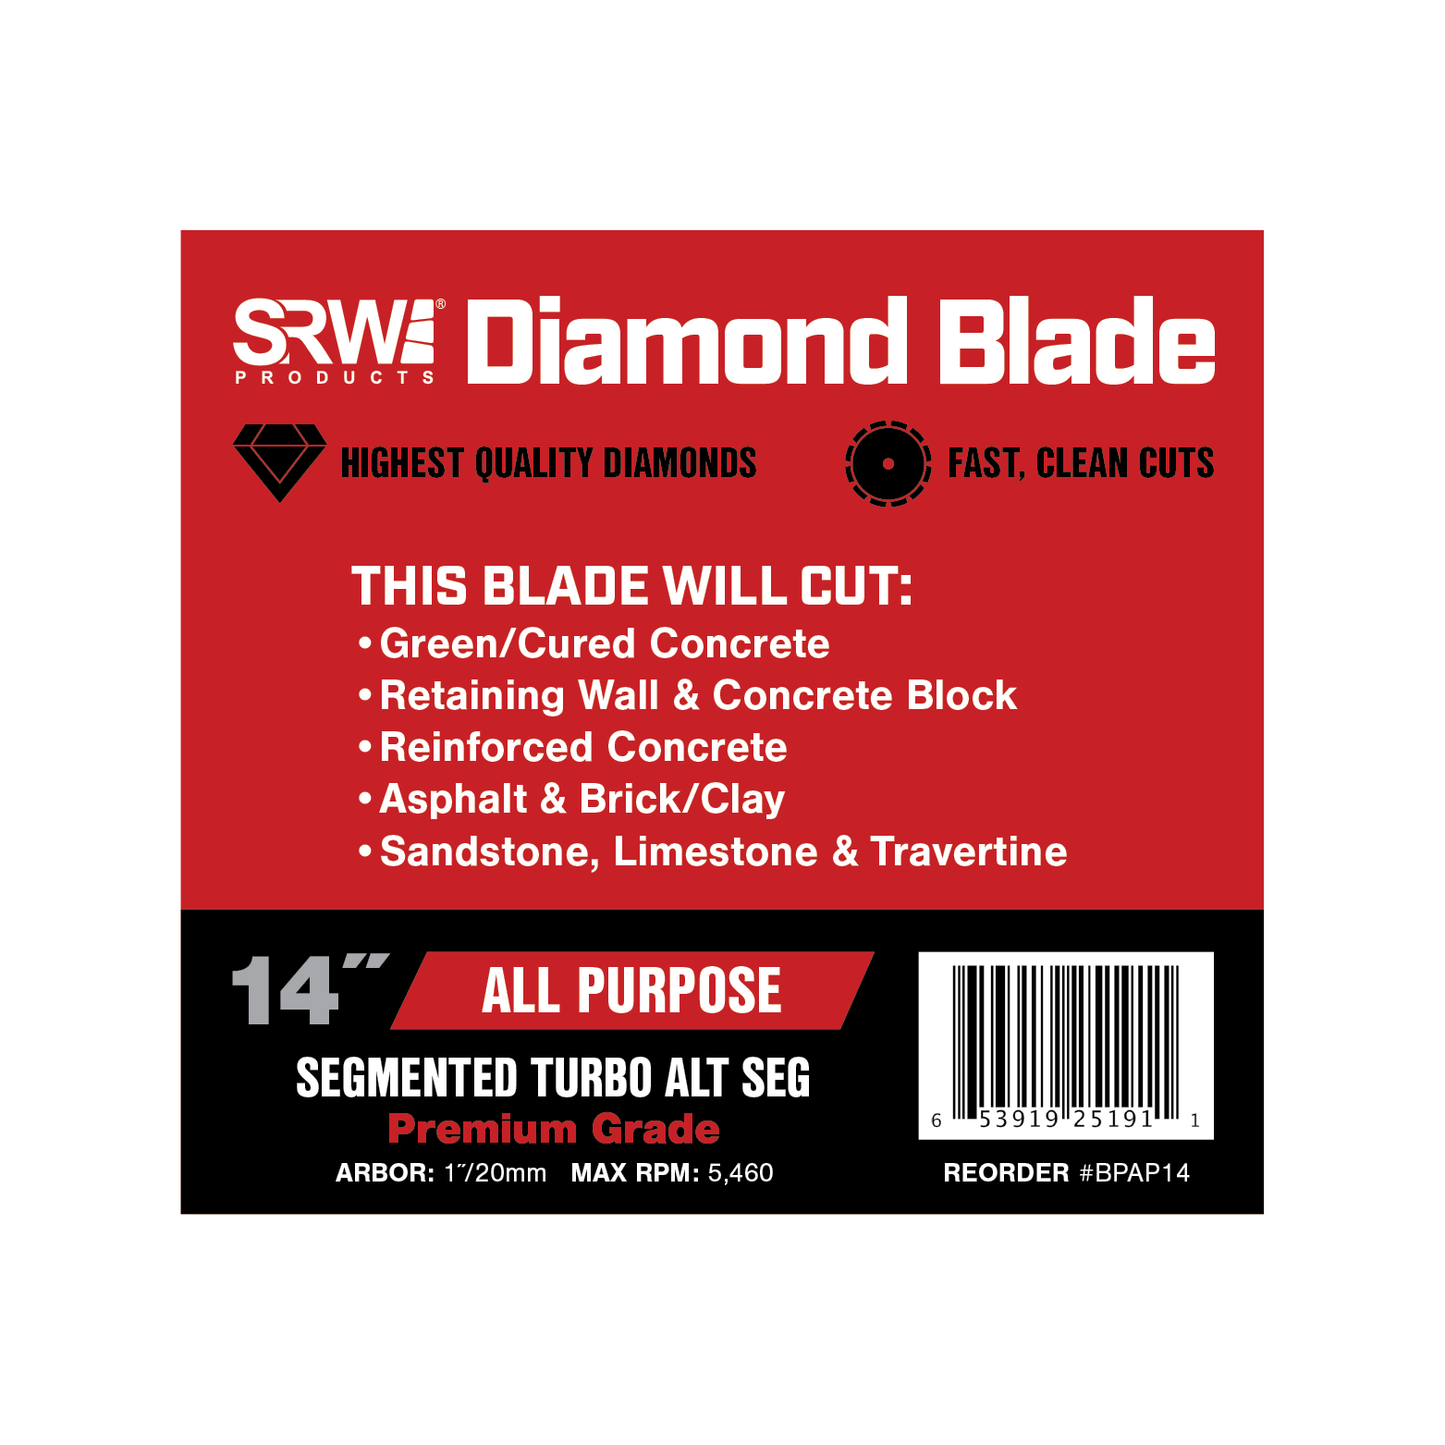 srw products all purpose diamond blade segmented turbo alt seg premium grade